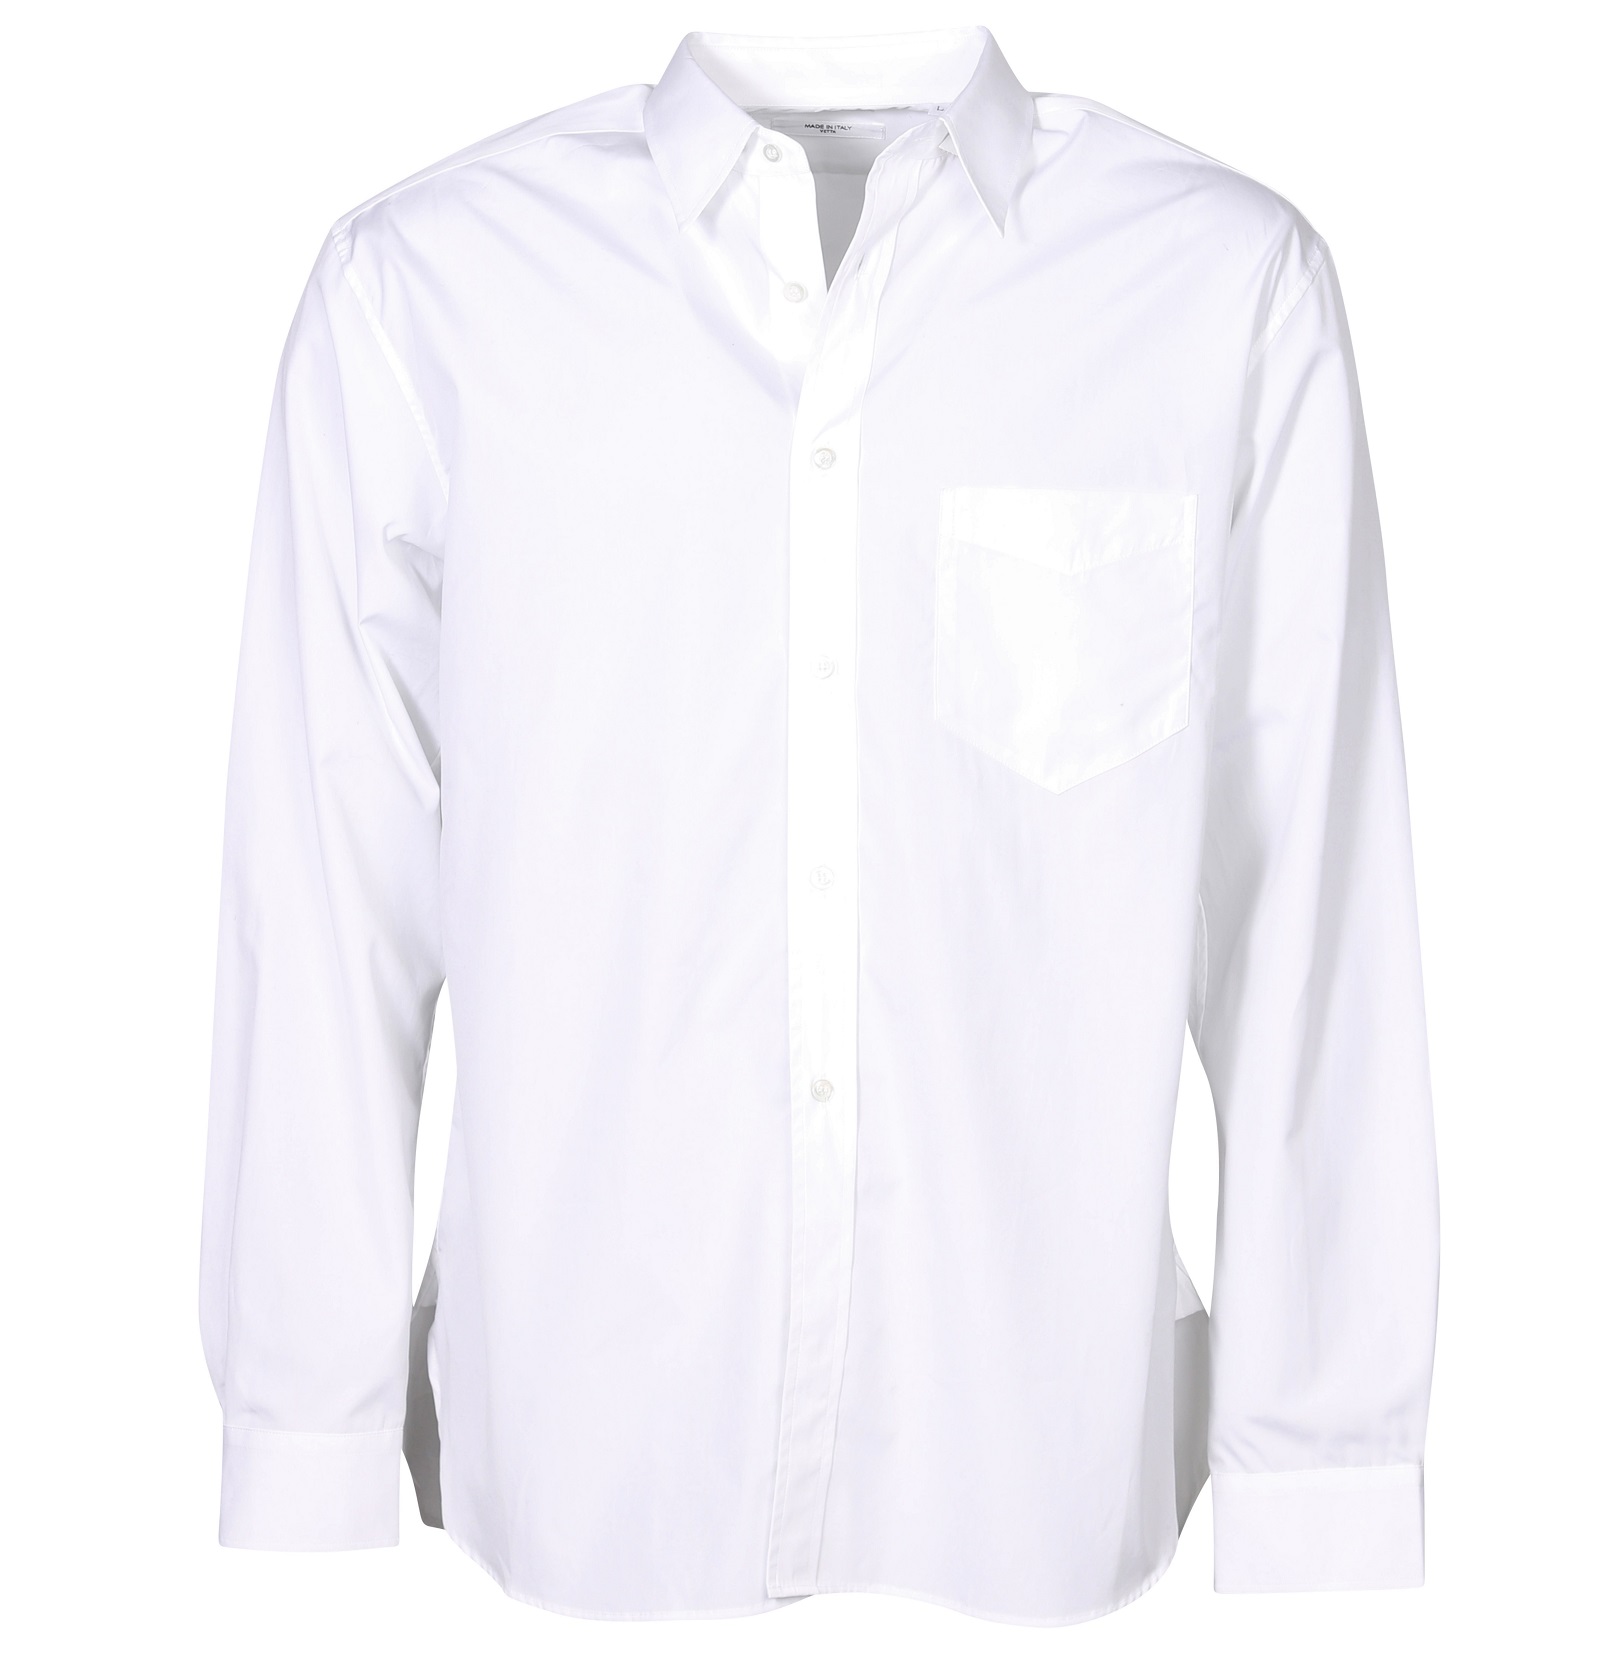 CELLAR DOOR Cotton Shirt in White XS